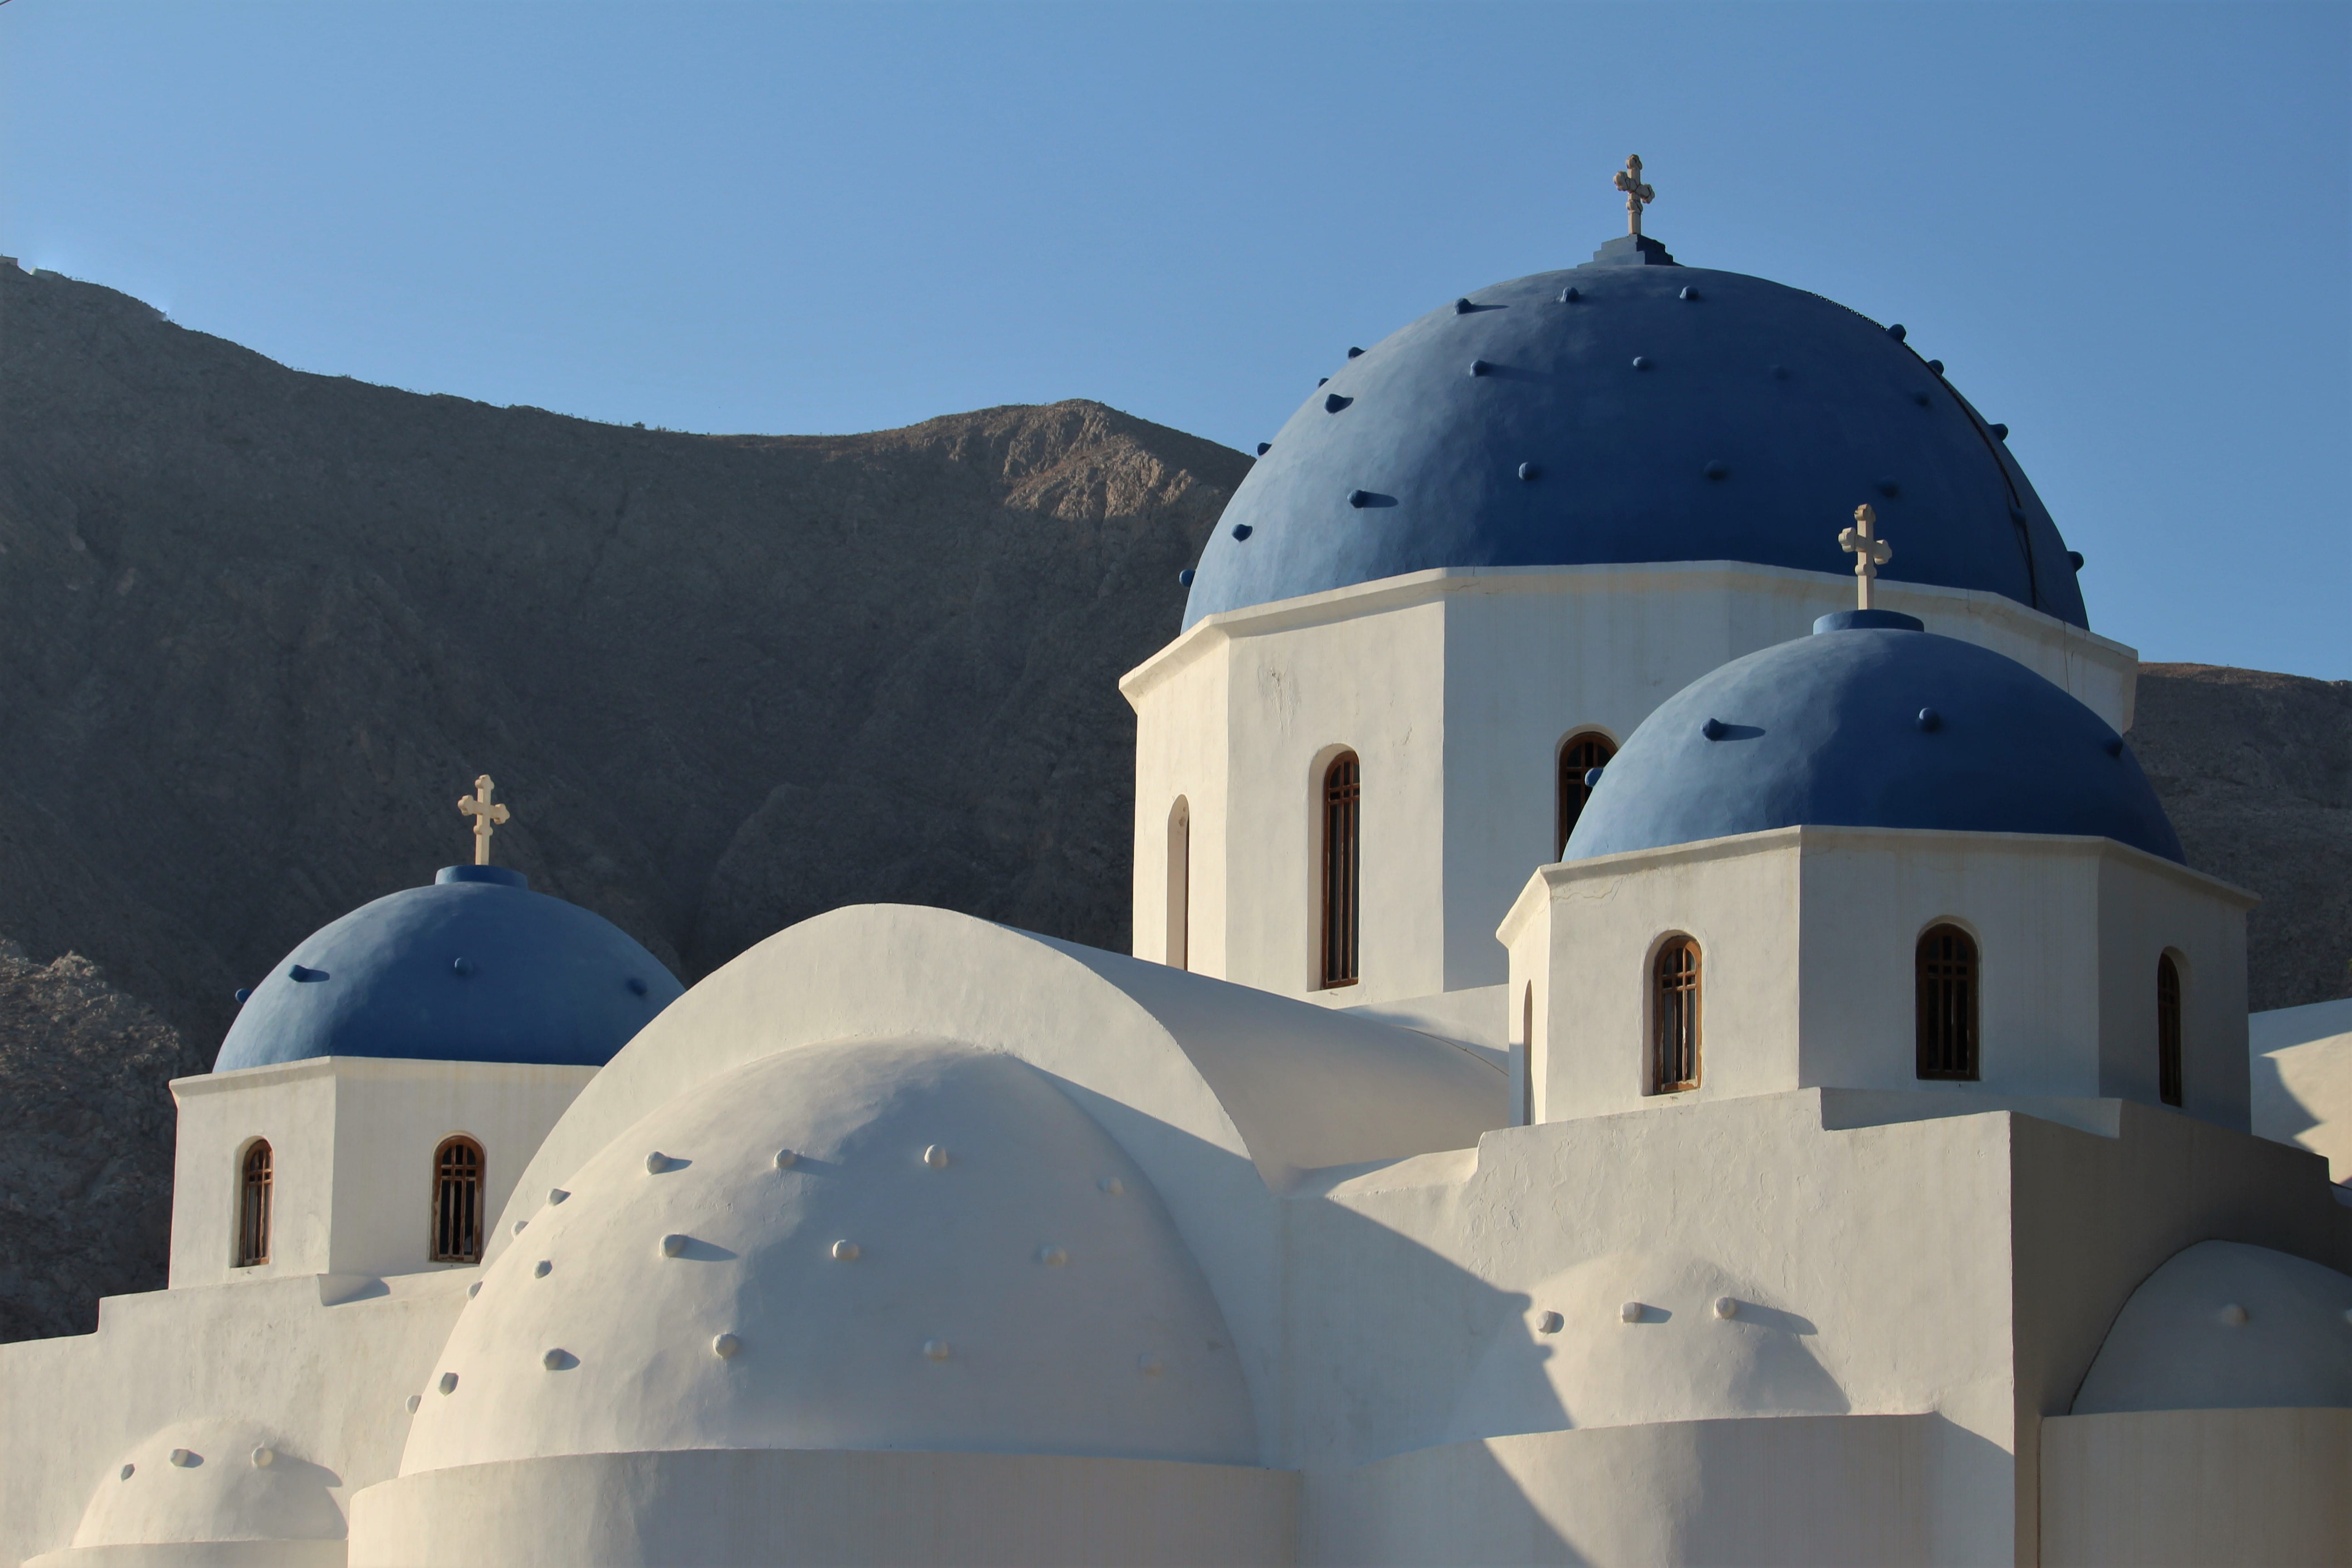 Church of the Holy Cross, blue dome church, Greece, building